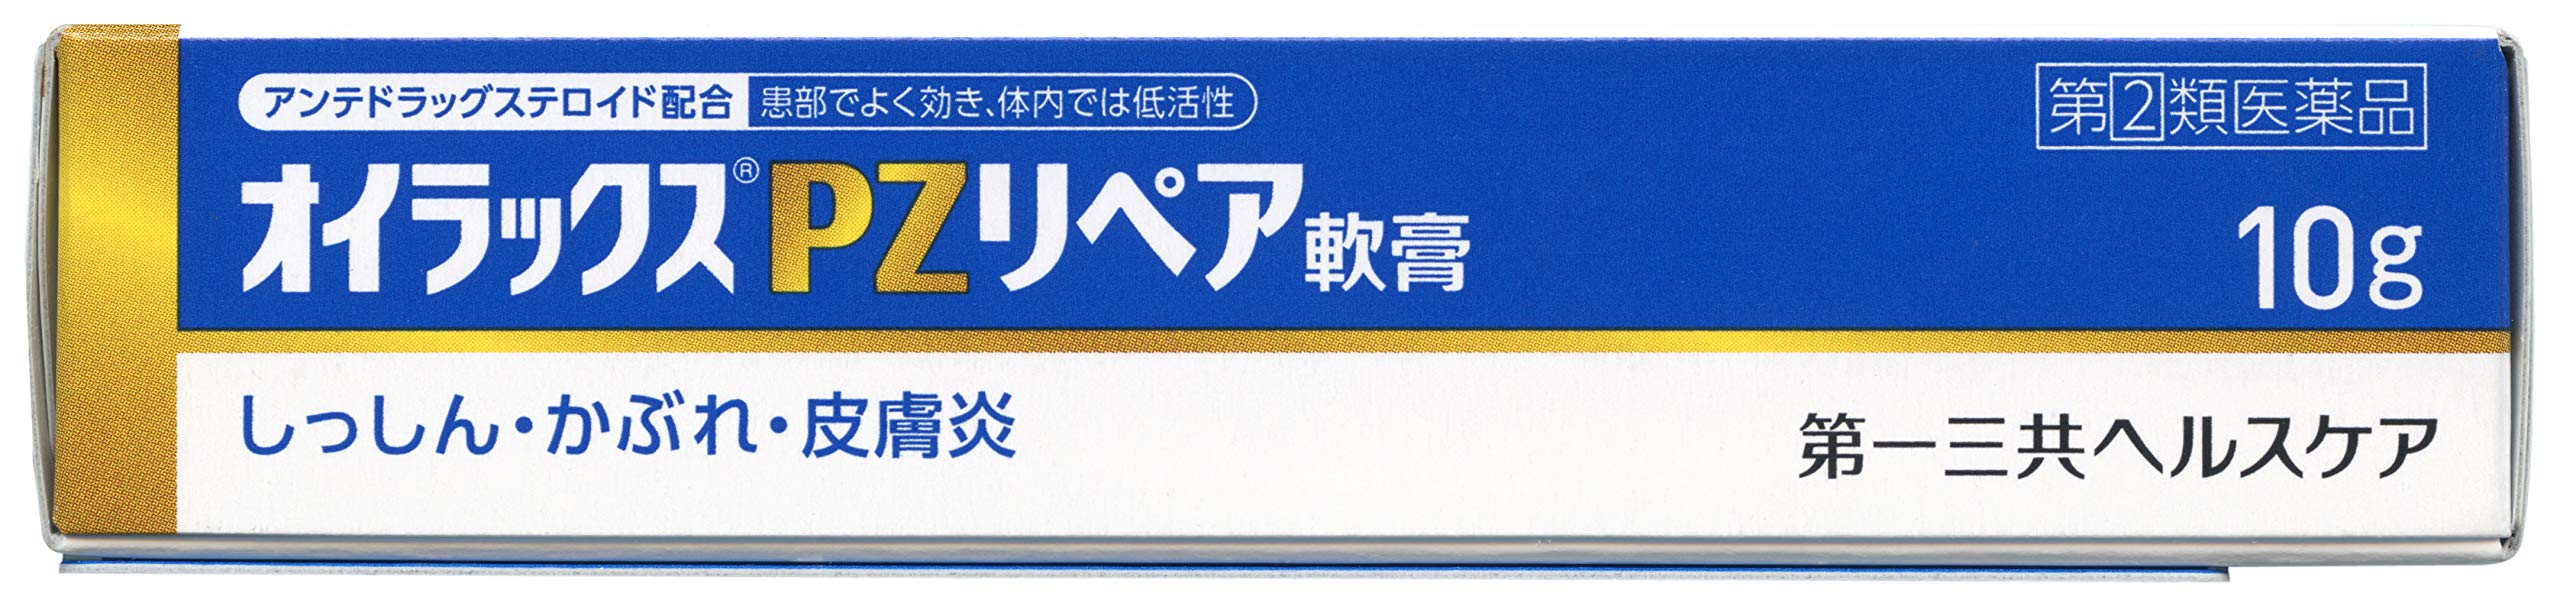 Oilax Pz 修復軟膏 10G 自我藥療稅制 - 日本指定 2 種藥物